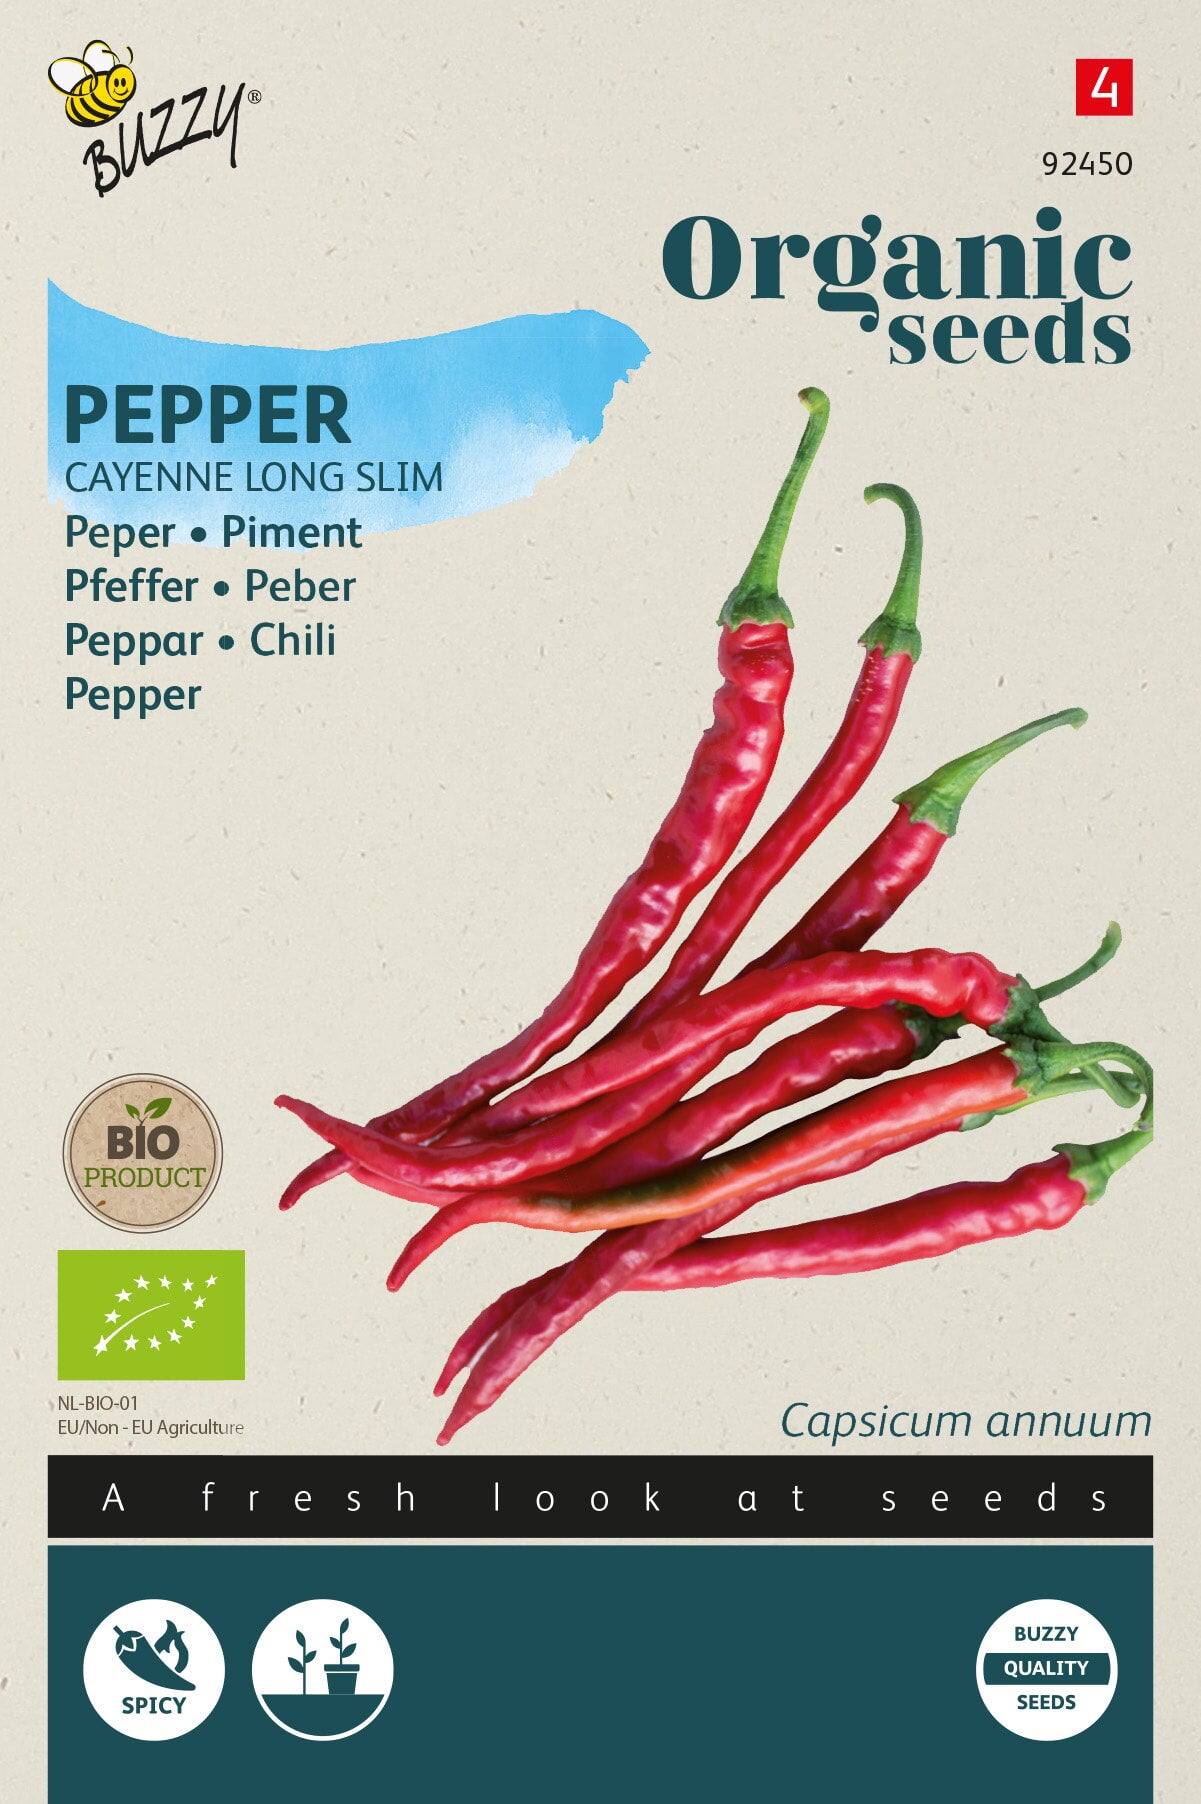 Buzzy® Organic Peper Cayenne long slim (BIO)